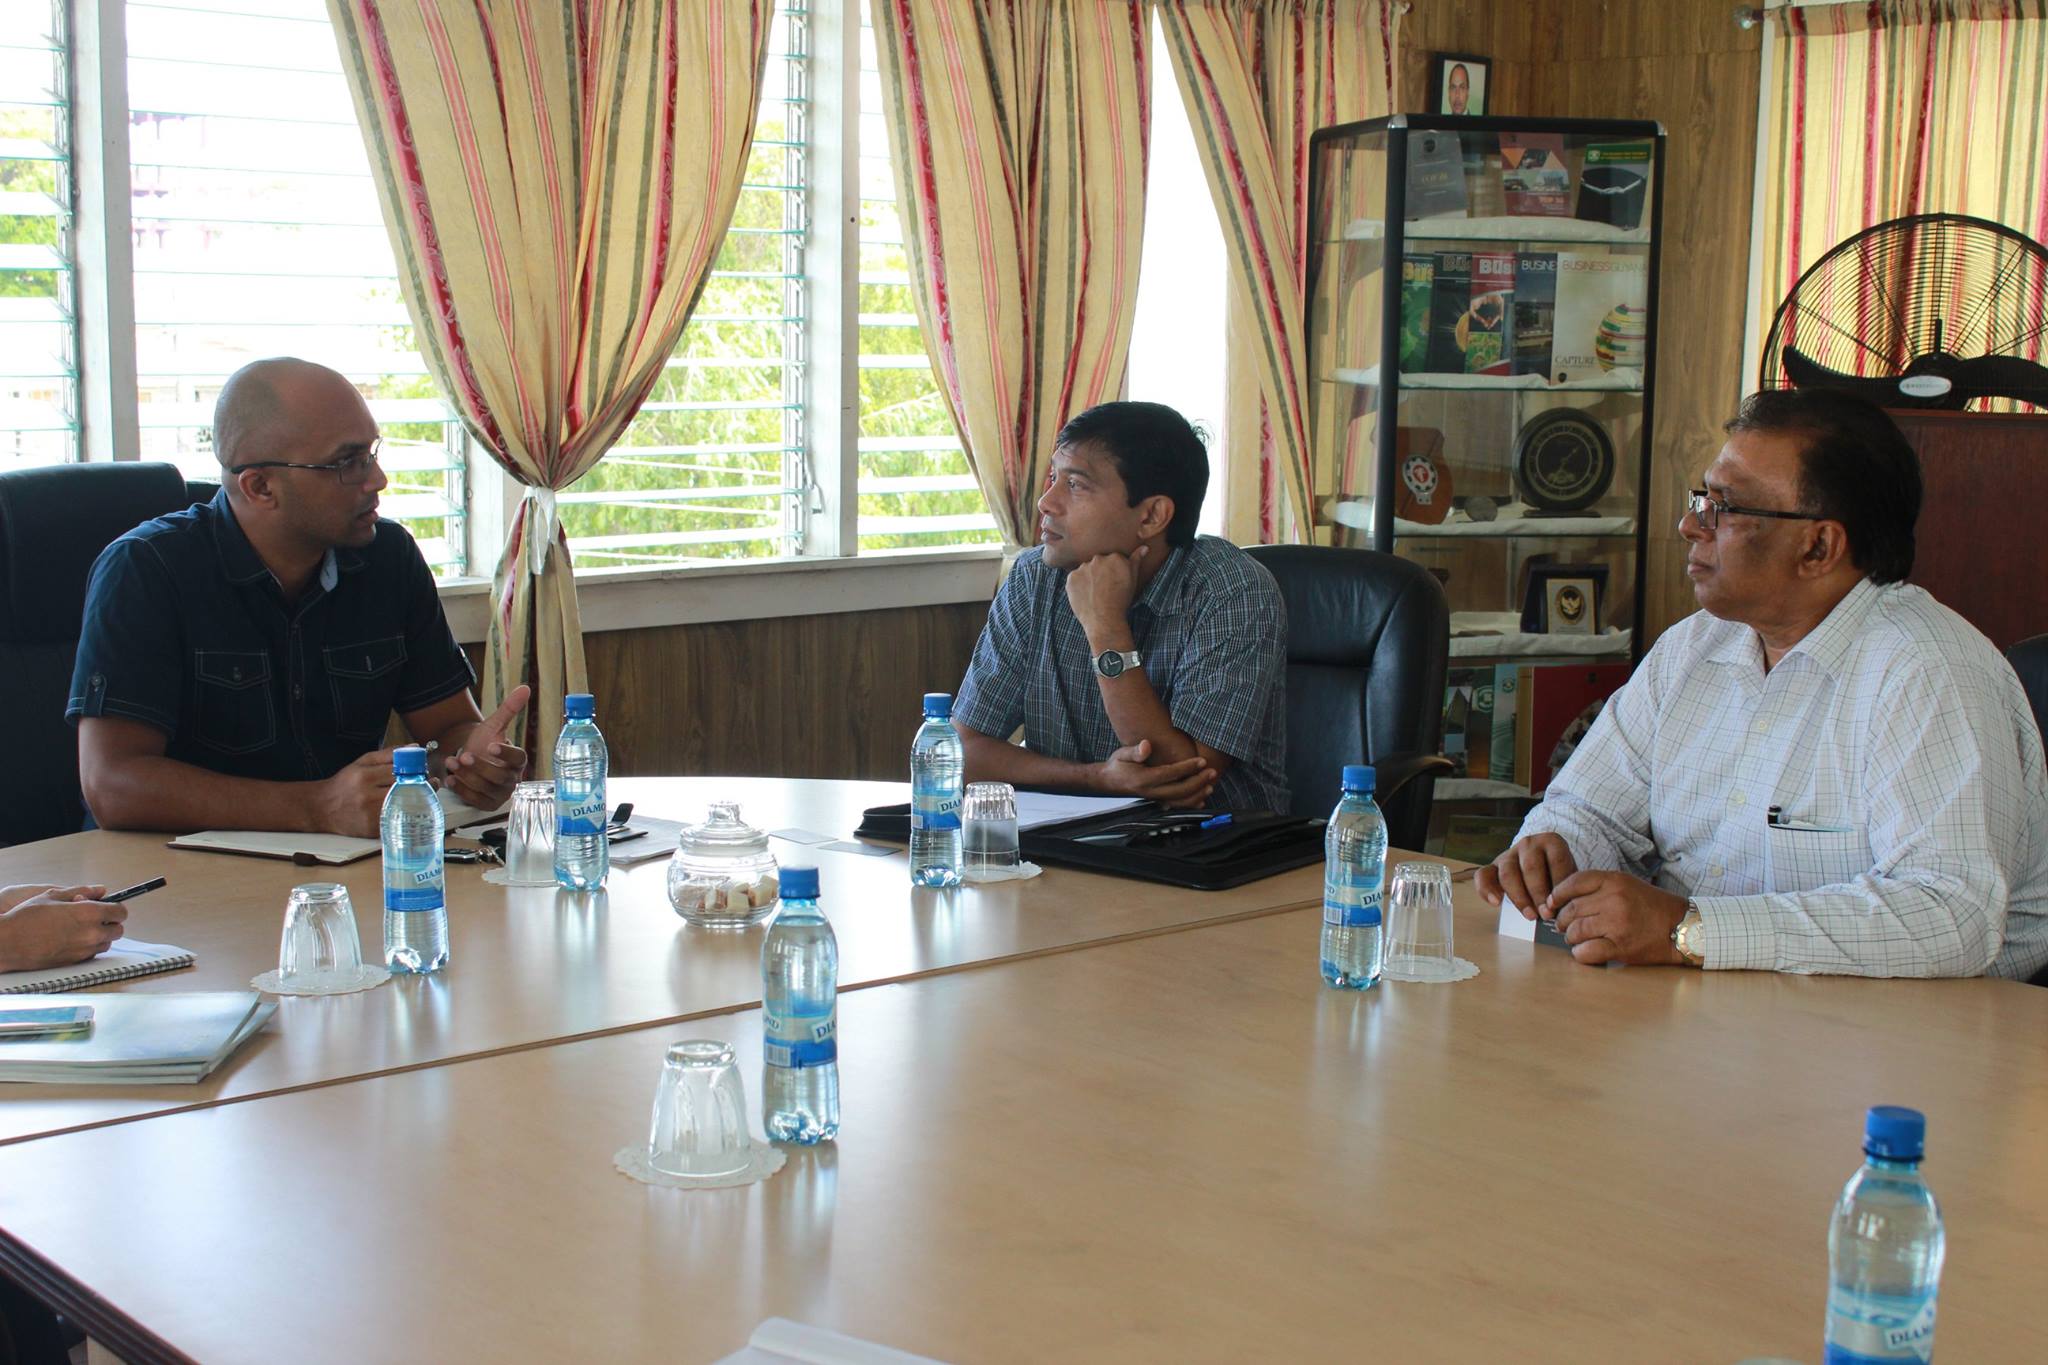 Meeting with Representatives of Subisco International (A Surinamese Company)